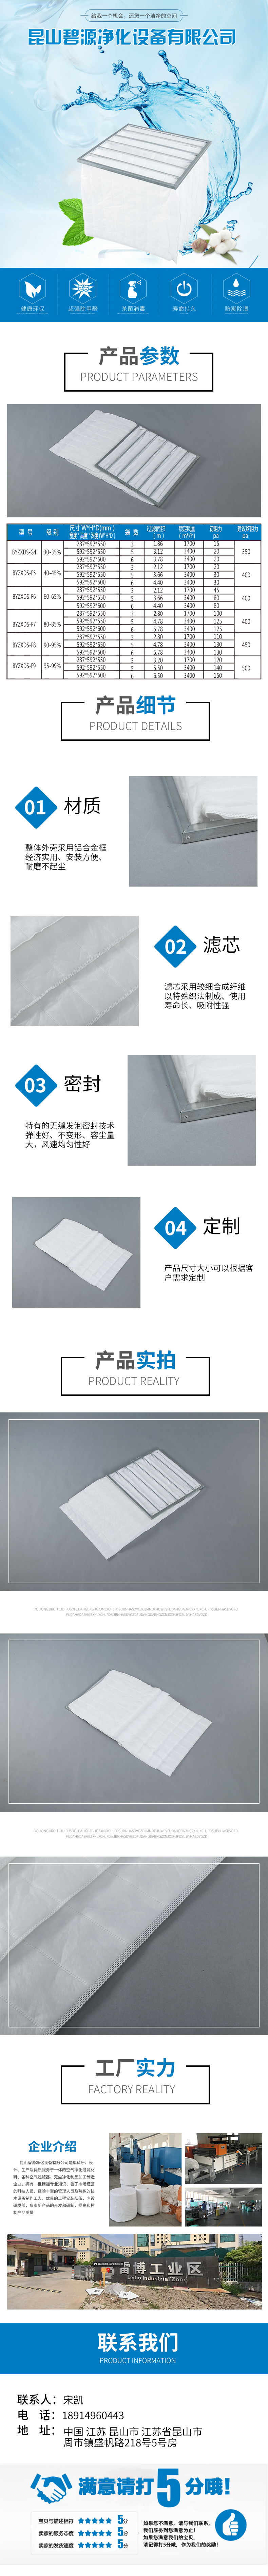 f5中效袋式乐动平台(中国)有限公司.jpg